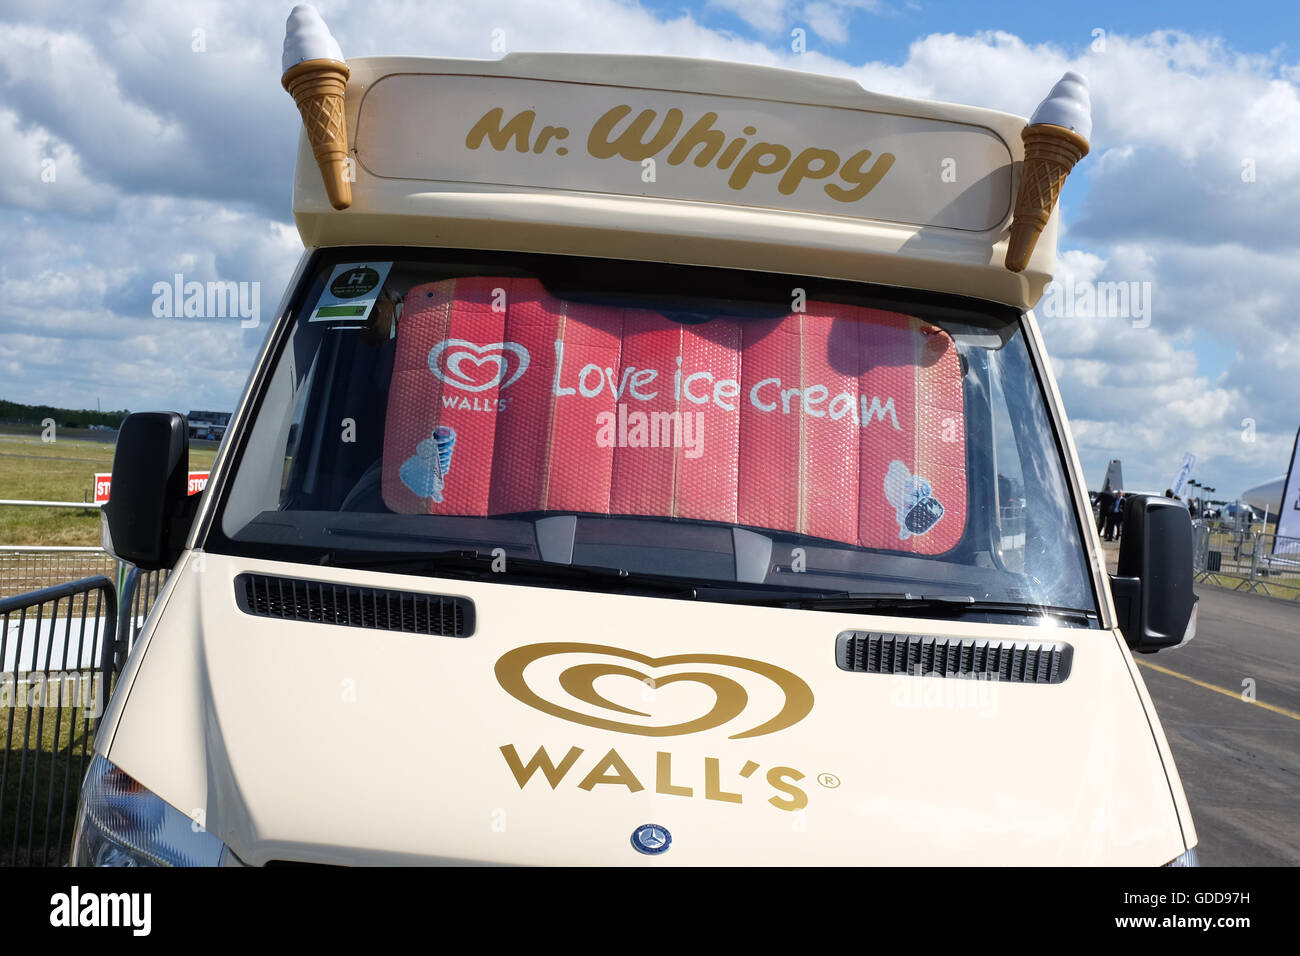 A 'Mr. Whippy' ice cream van. Stock Photo